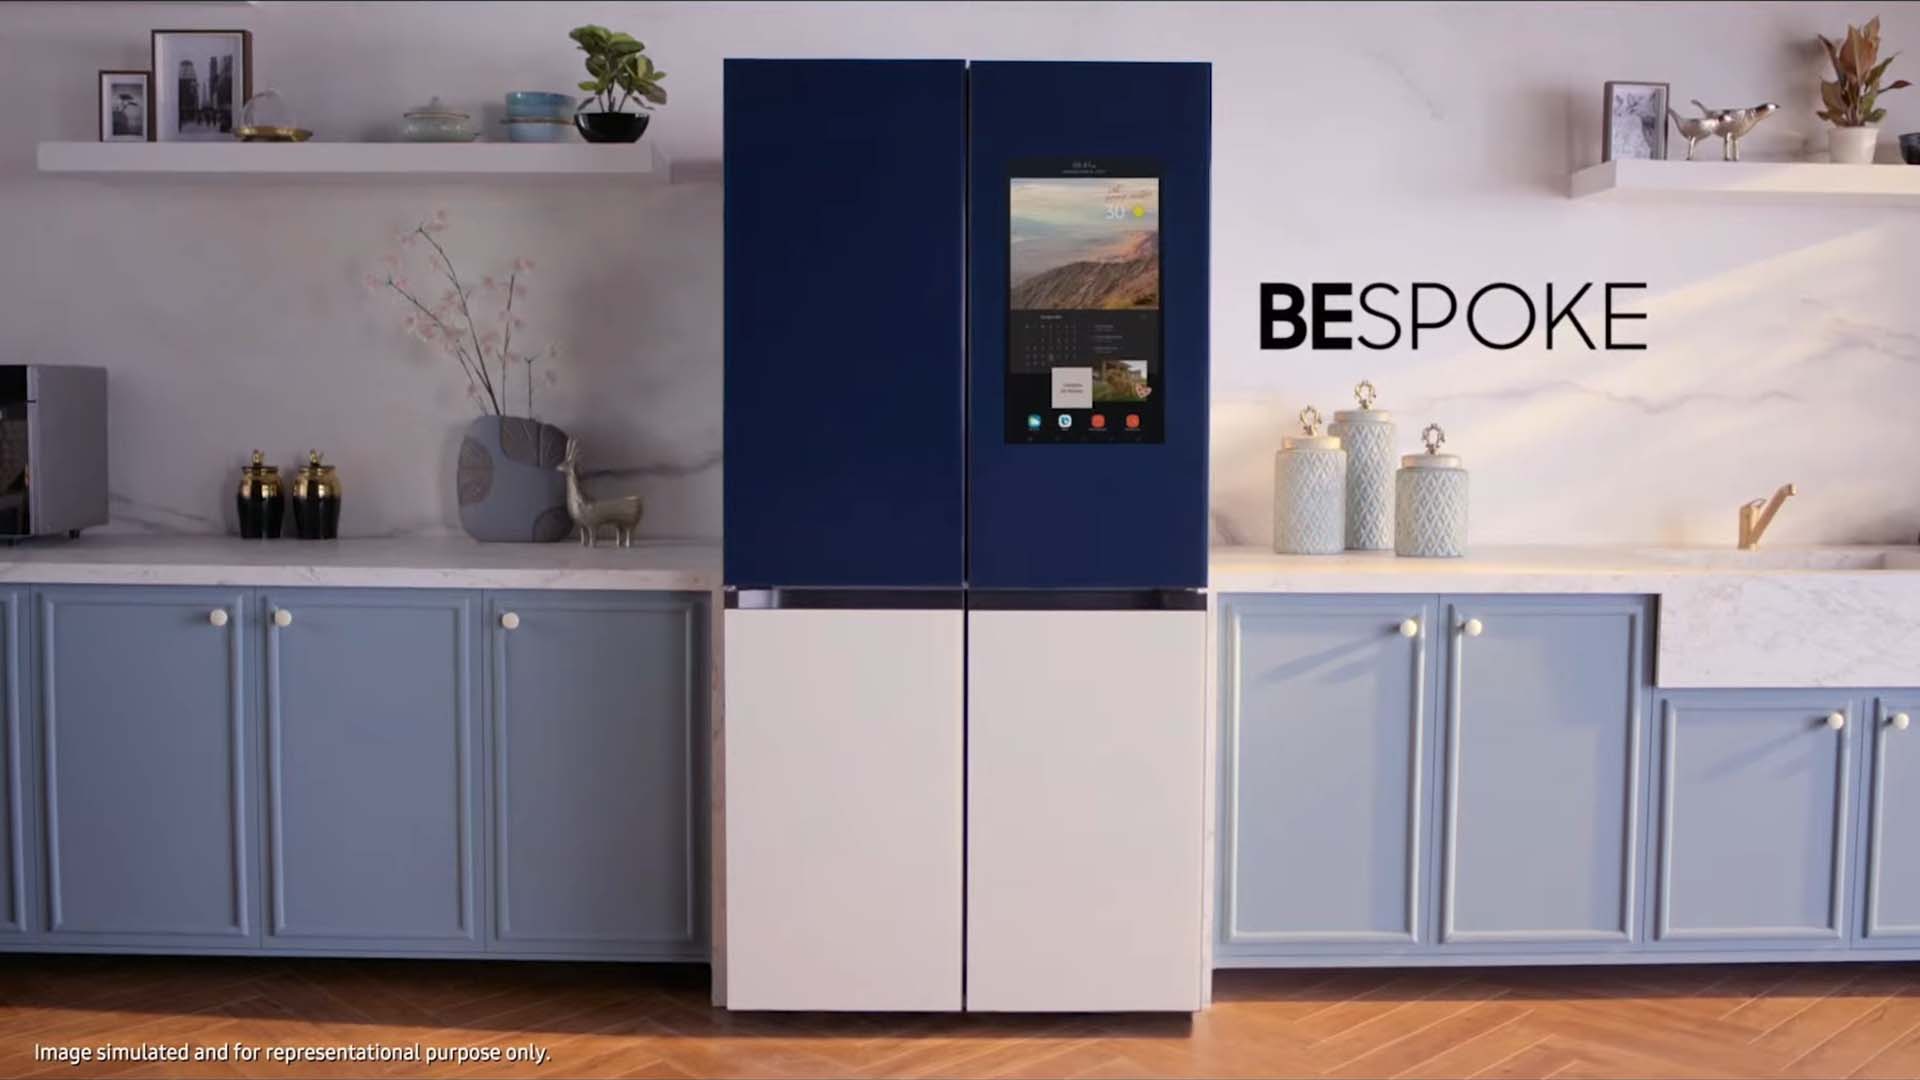 samsung-bespoke-french-door-smart-refrigerator-with-customizable-panels